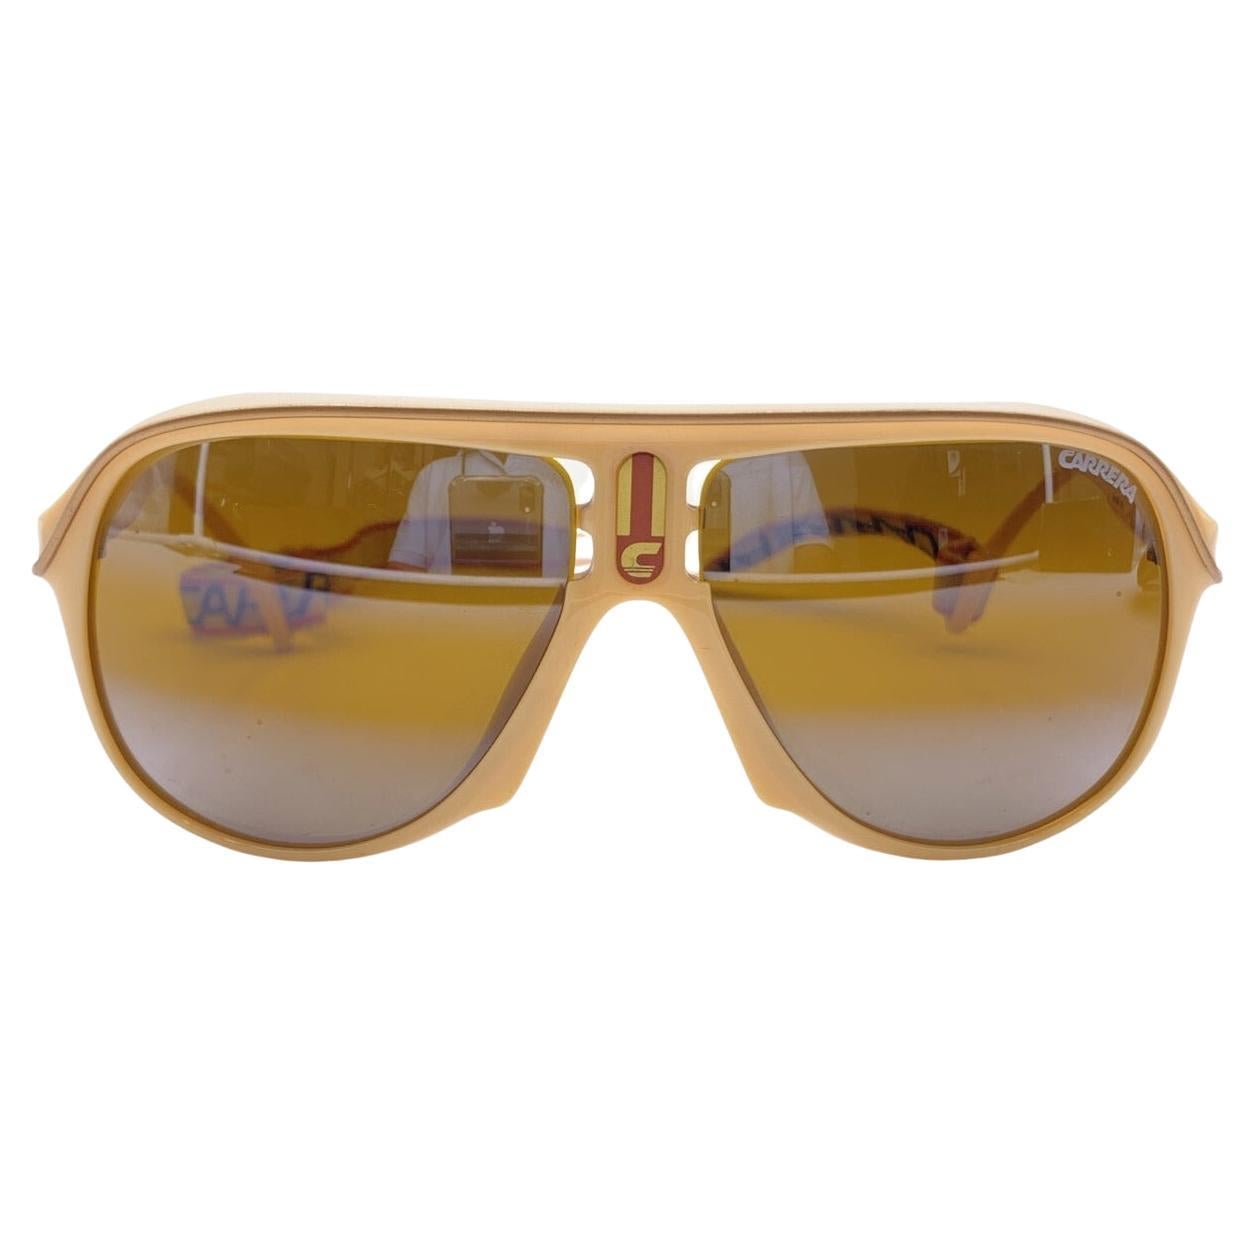 Carrera Vintage Aviator Unisex Sport Sunglasses 5544 70 63/13 130mm For Sale